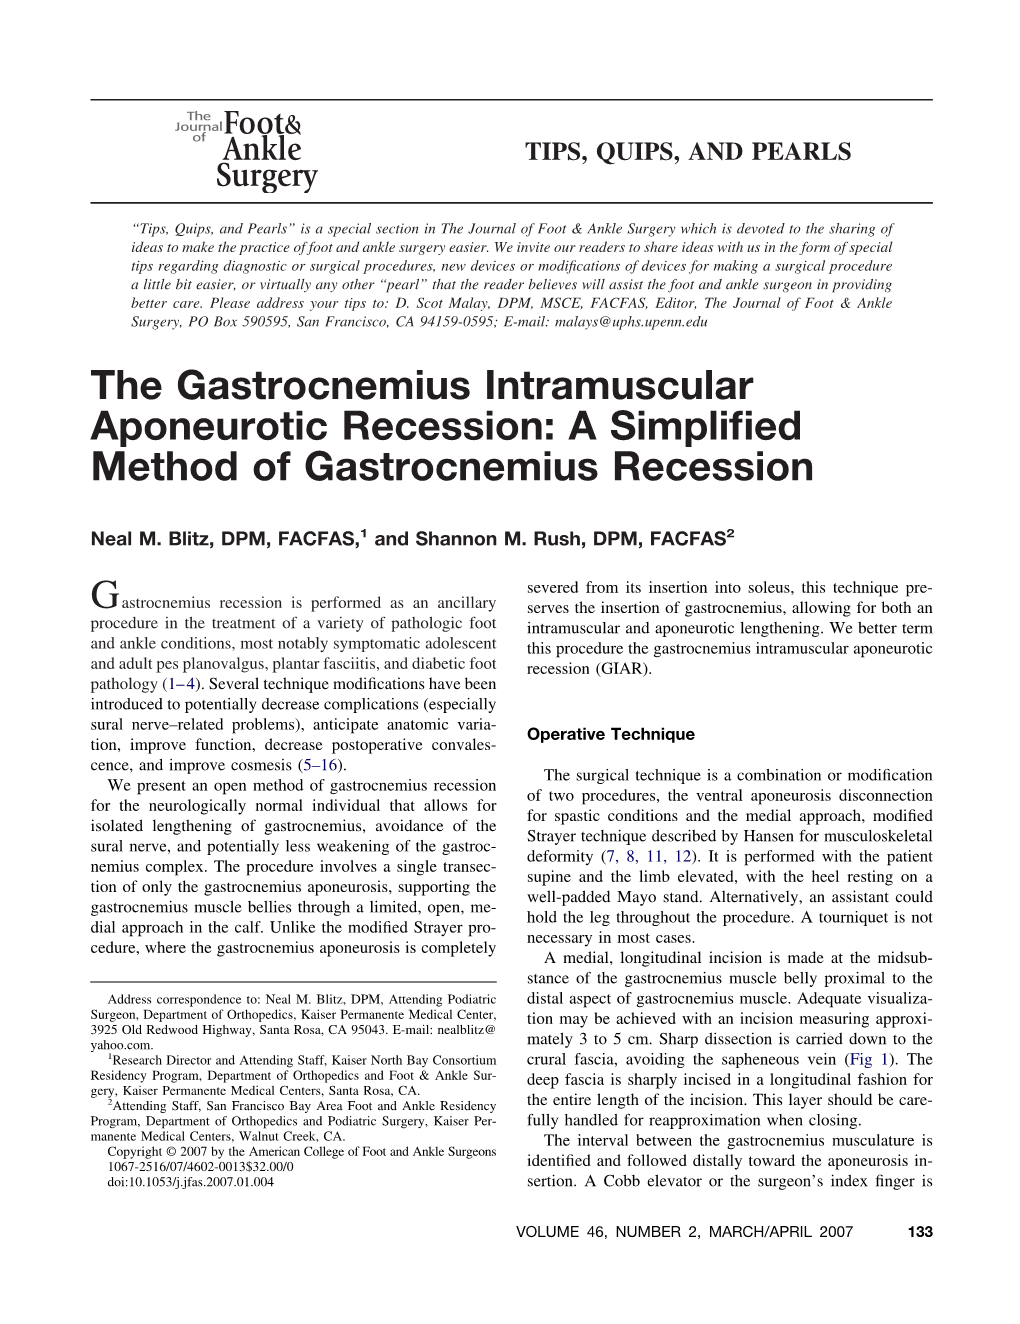 The Gastrocnemius Intramuscular Aponeurotic Recession: a Simpliﬁed Method of Gastrocnemius Recession